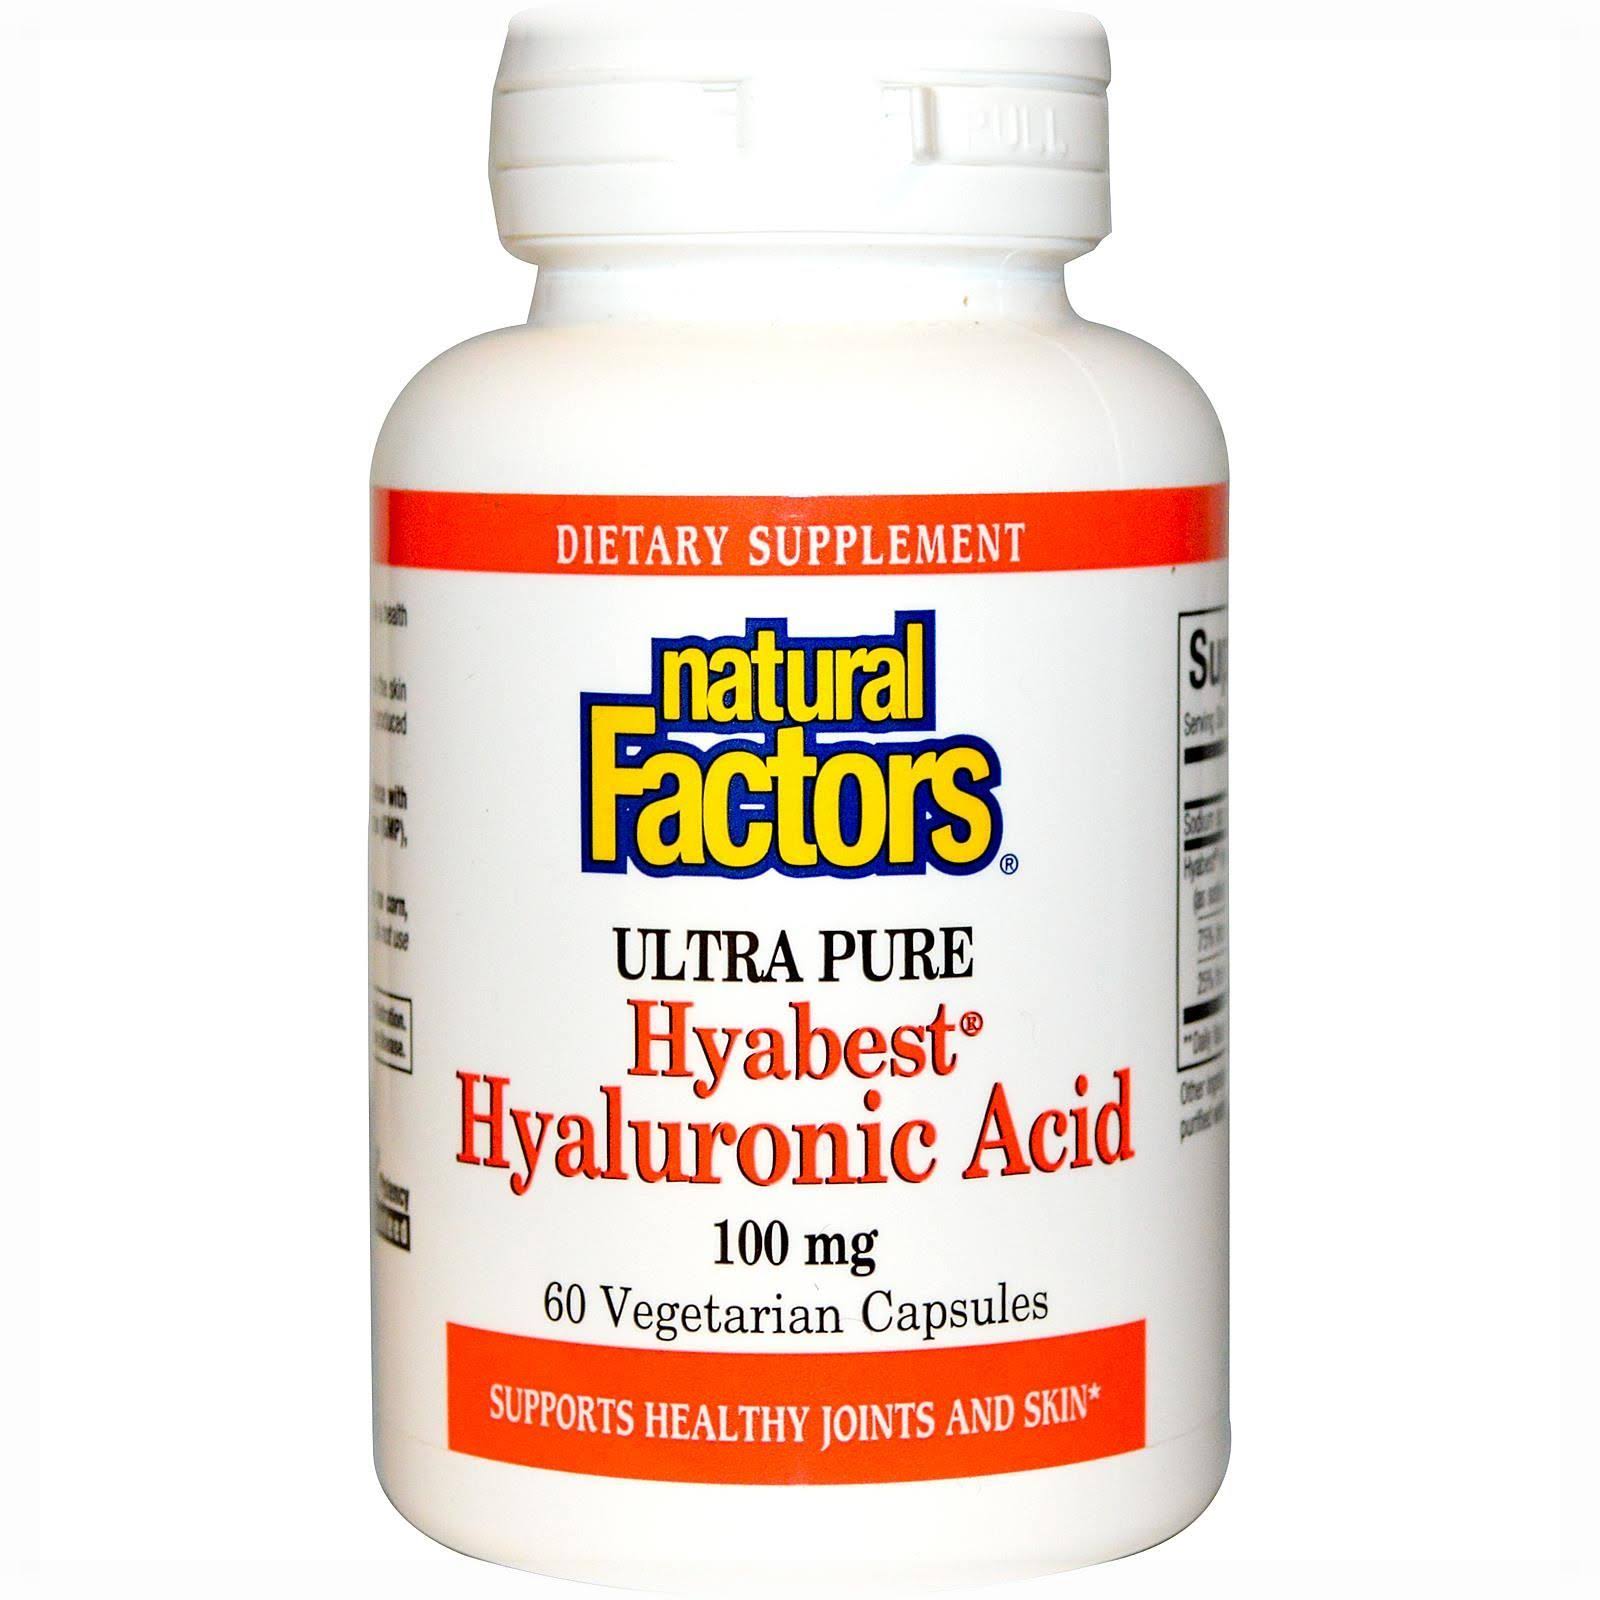 Natural Factors Ultra Pure Hyabest Hyaluronic Acid - 100mg, 60 Vegetarian Capsules